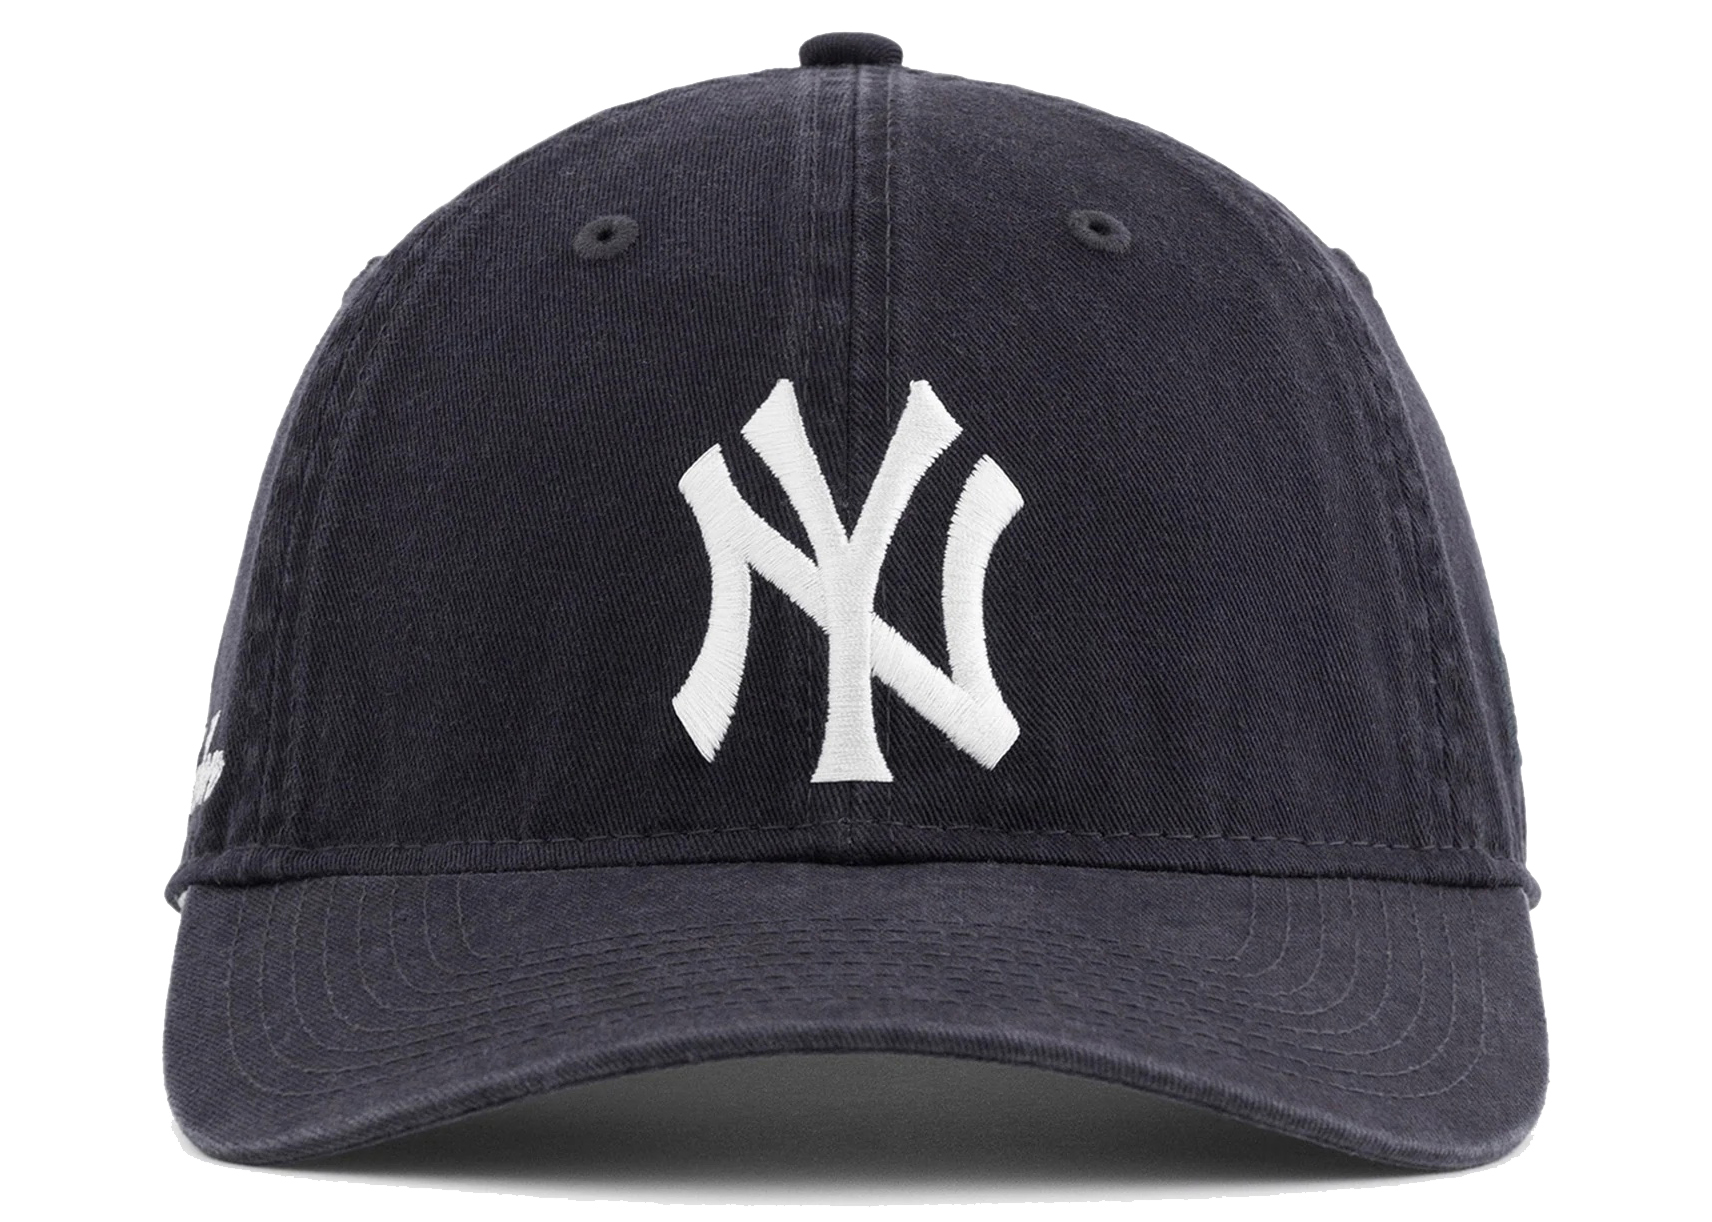 SupALD New Era Yankees Ballpark Hat